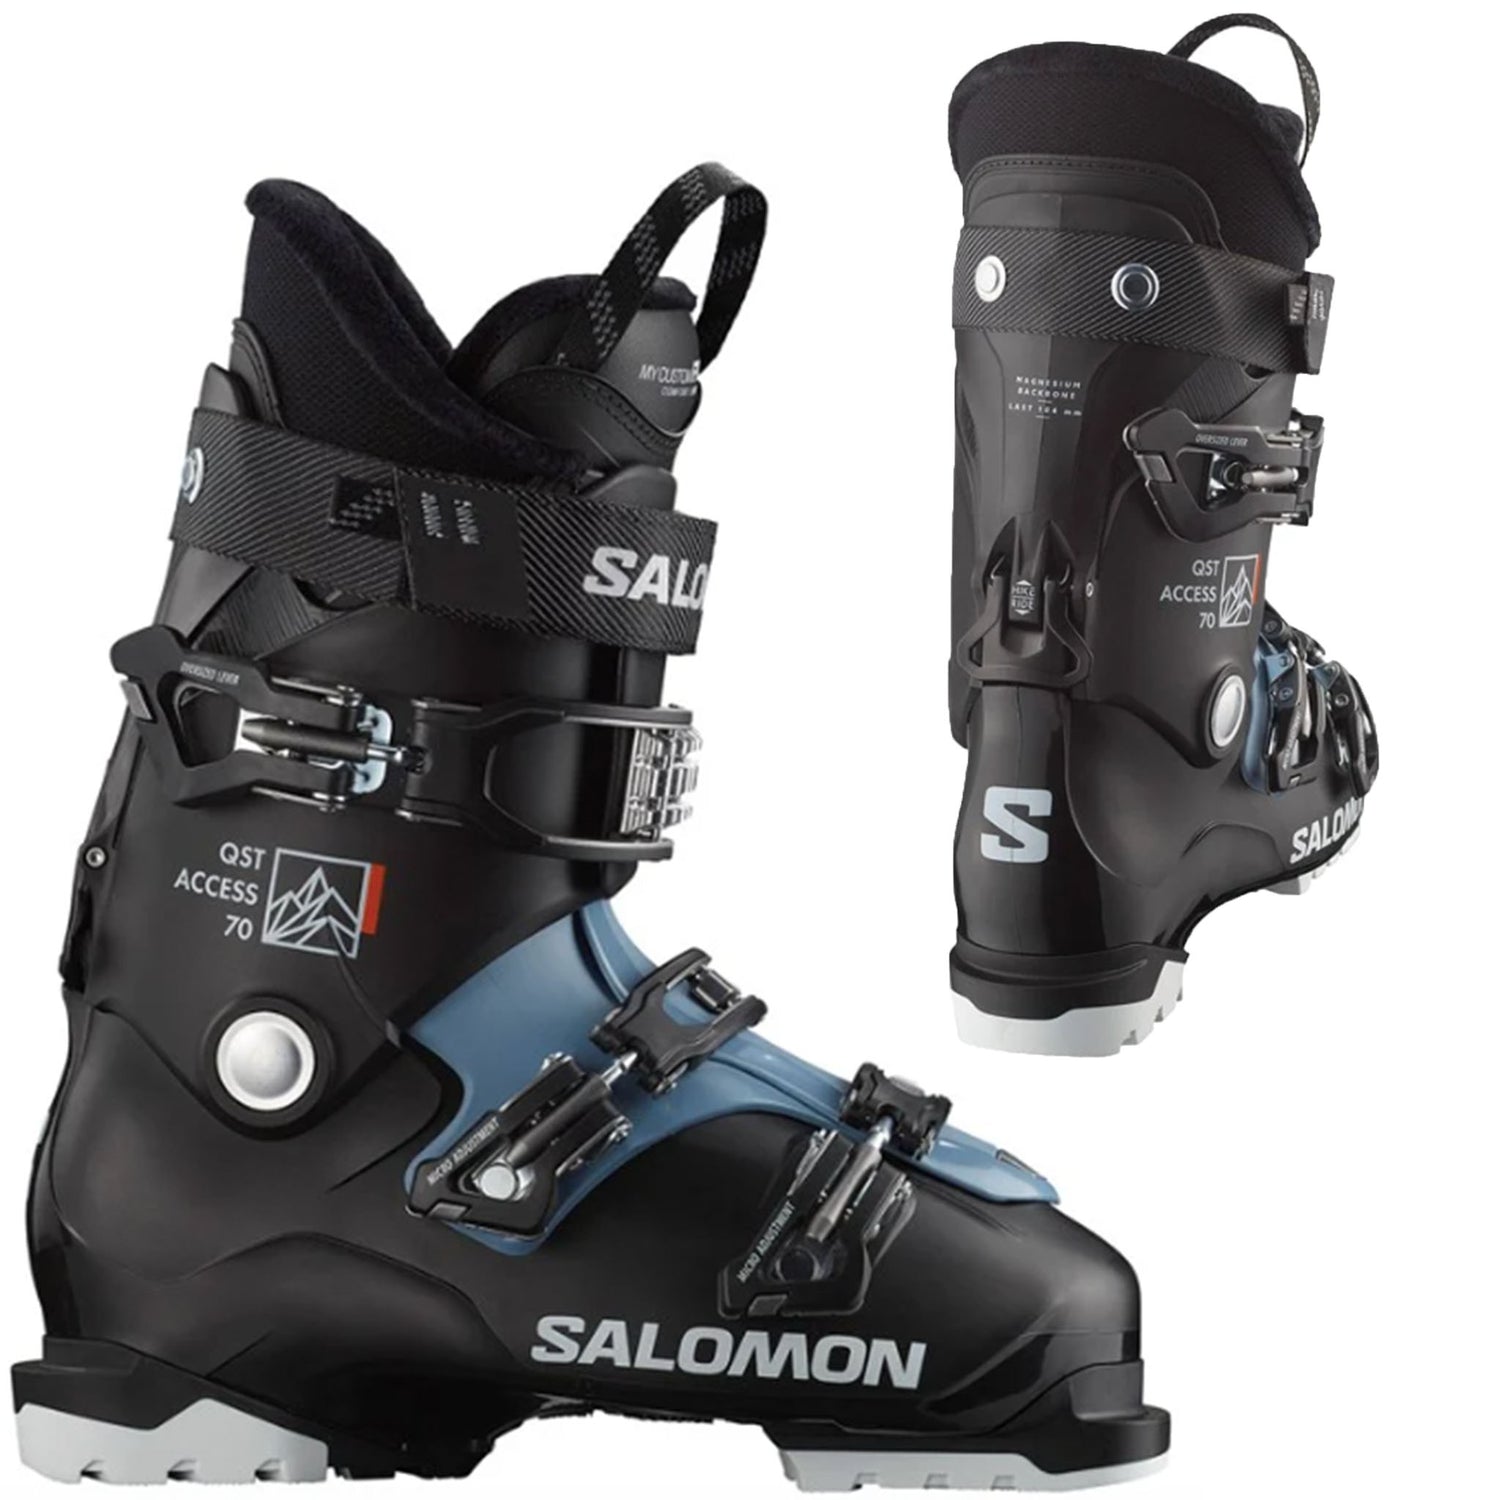 Salomon Men's QST Access 70 Alpine Ski Boots